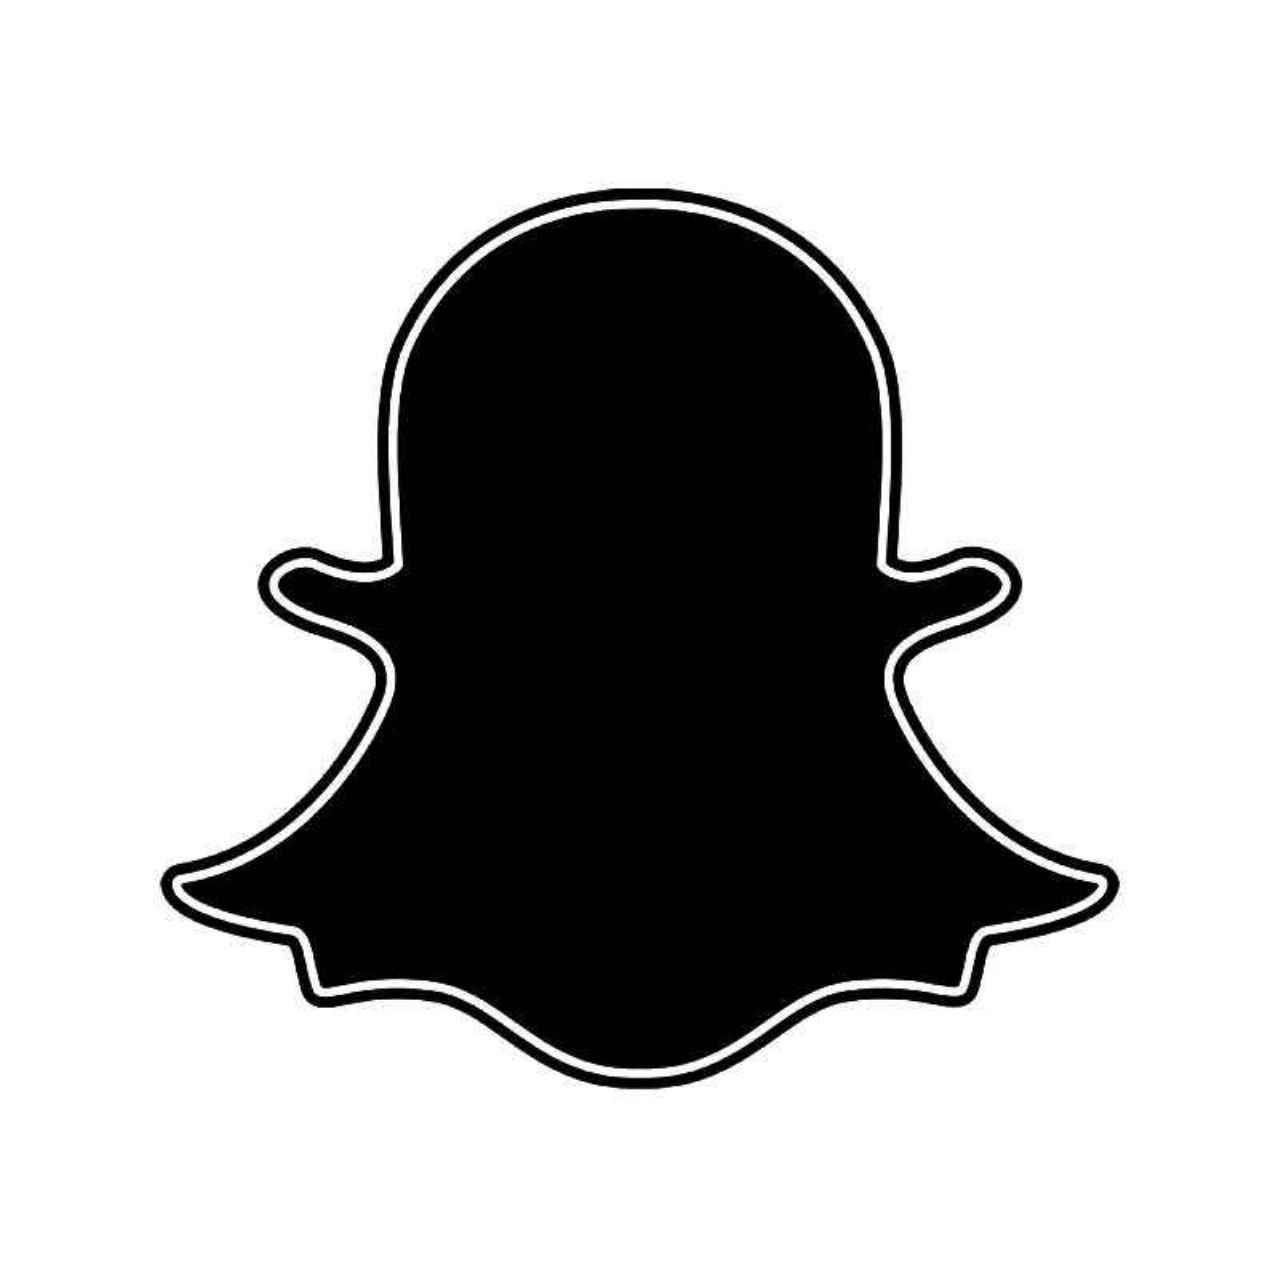 White Ghost Logo - Snapchat Ghost Logo Vinyl Decal Sticker in 2019 | Aftermarket Decals ...